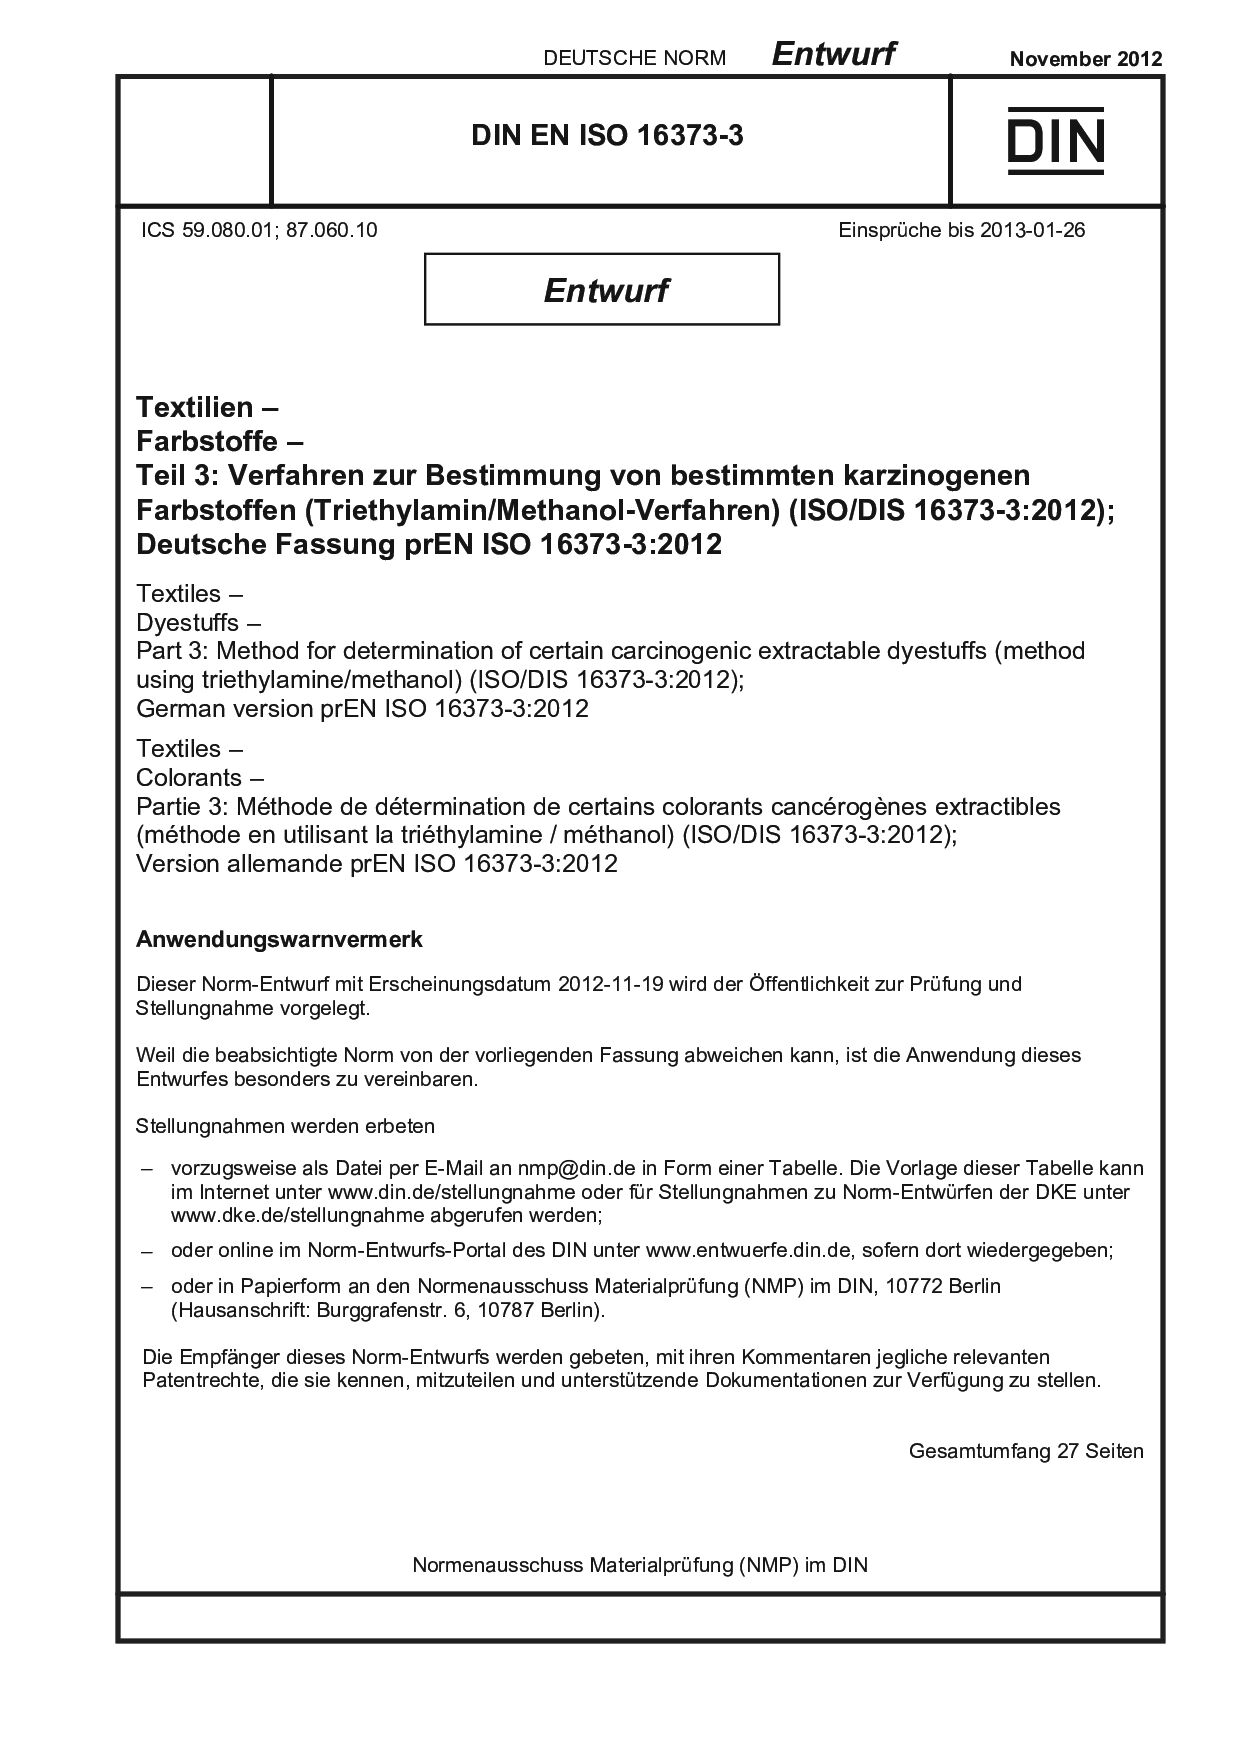 DIN EN ISO 16373-3 E:2012-11